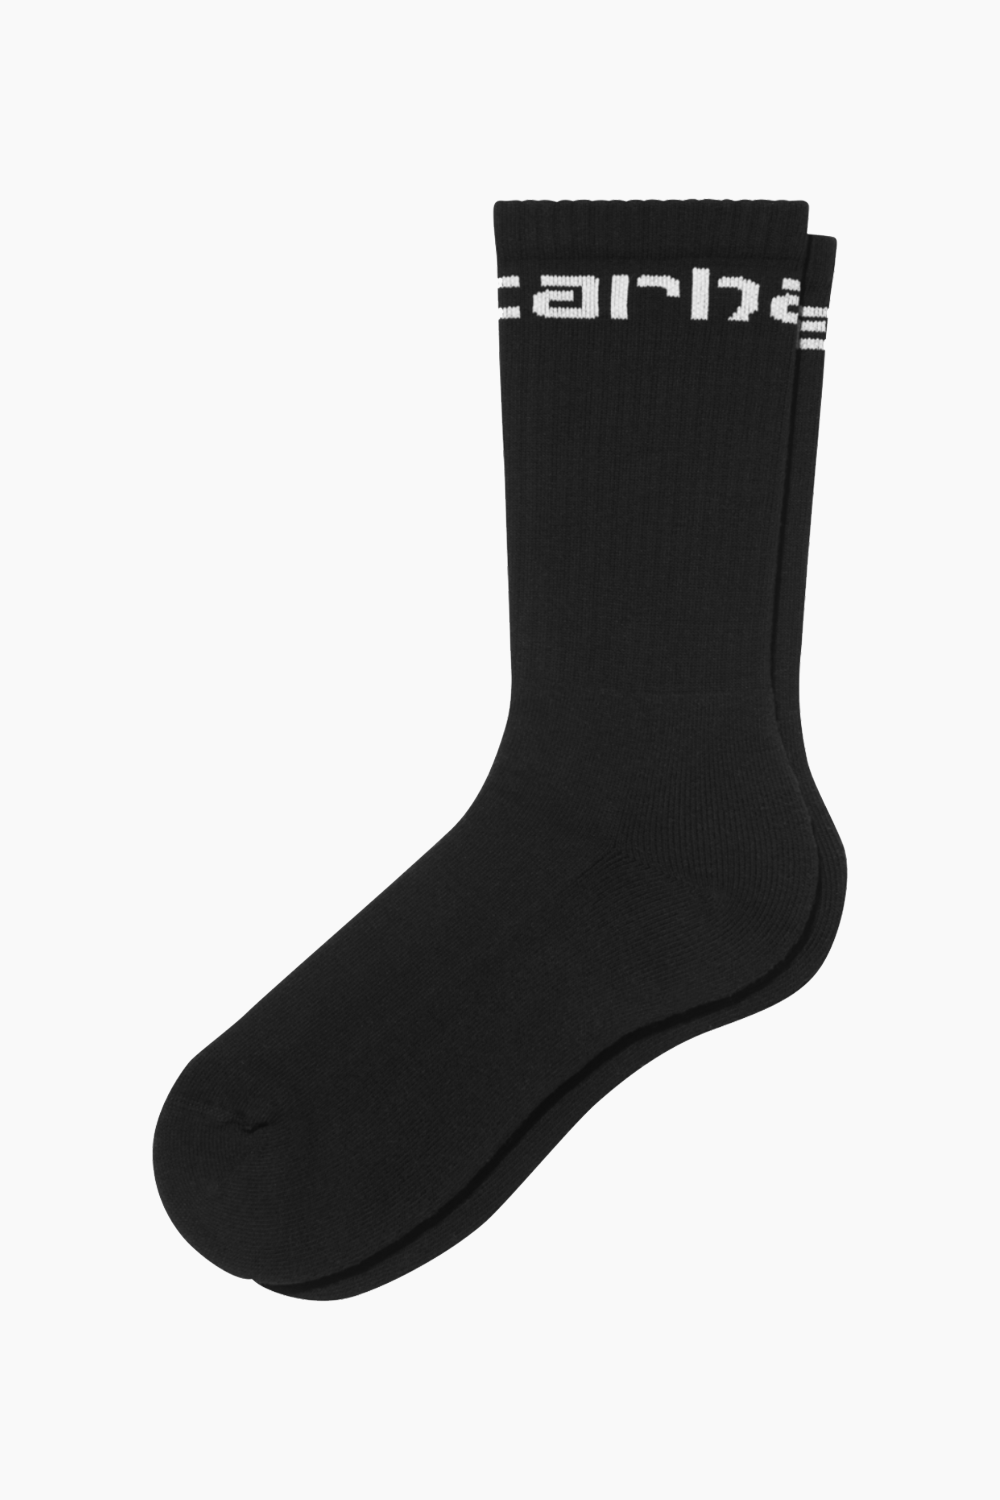 Billede af Carhartt WIP Socks - Black/White - Carhartt WIP - Sort One Size